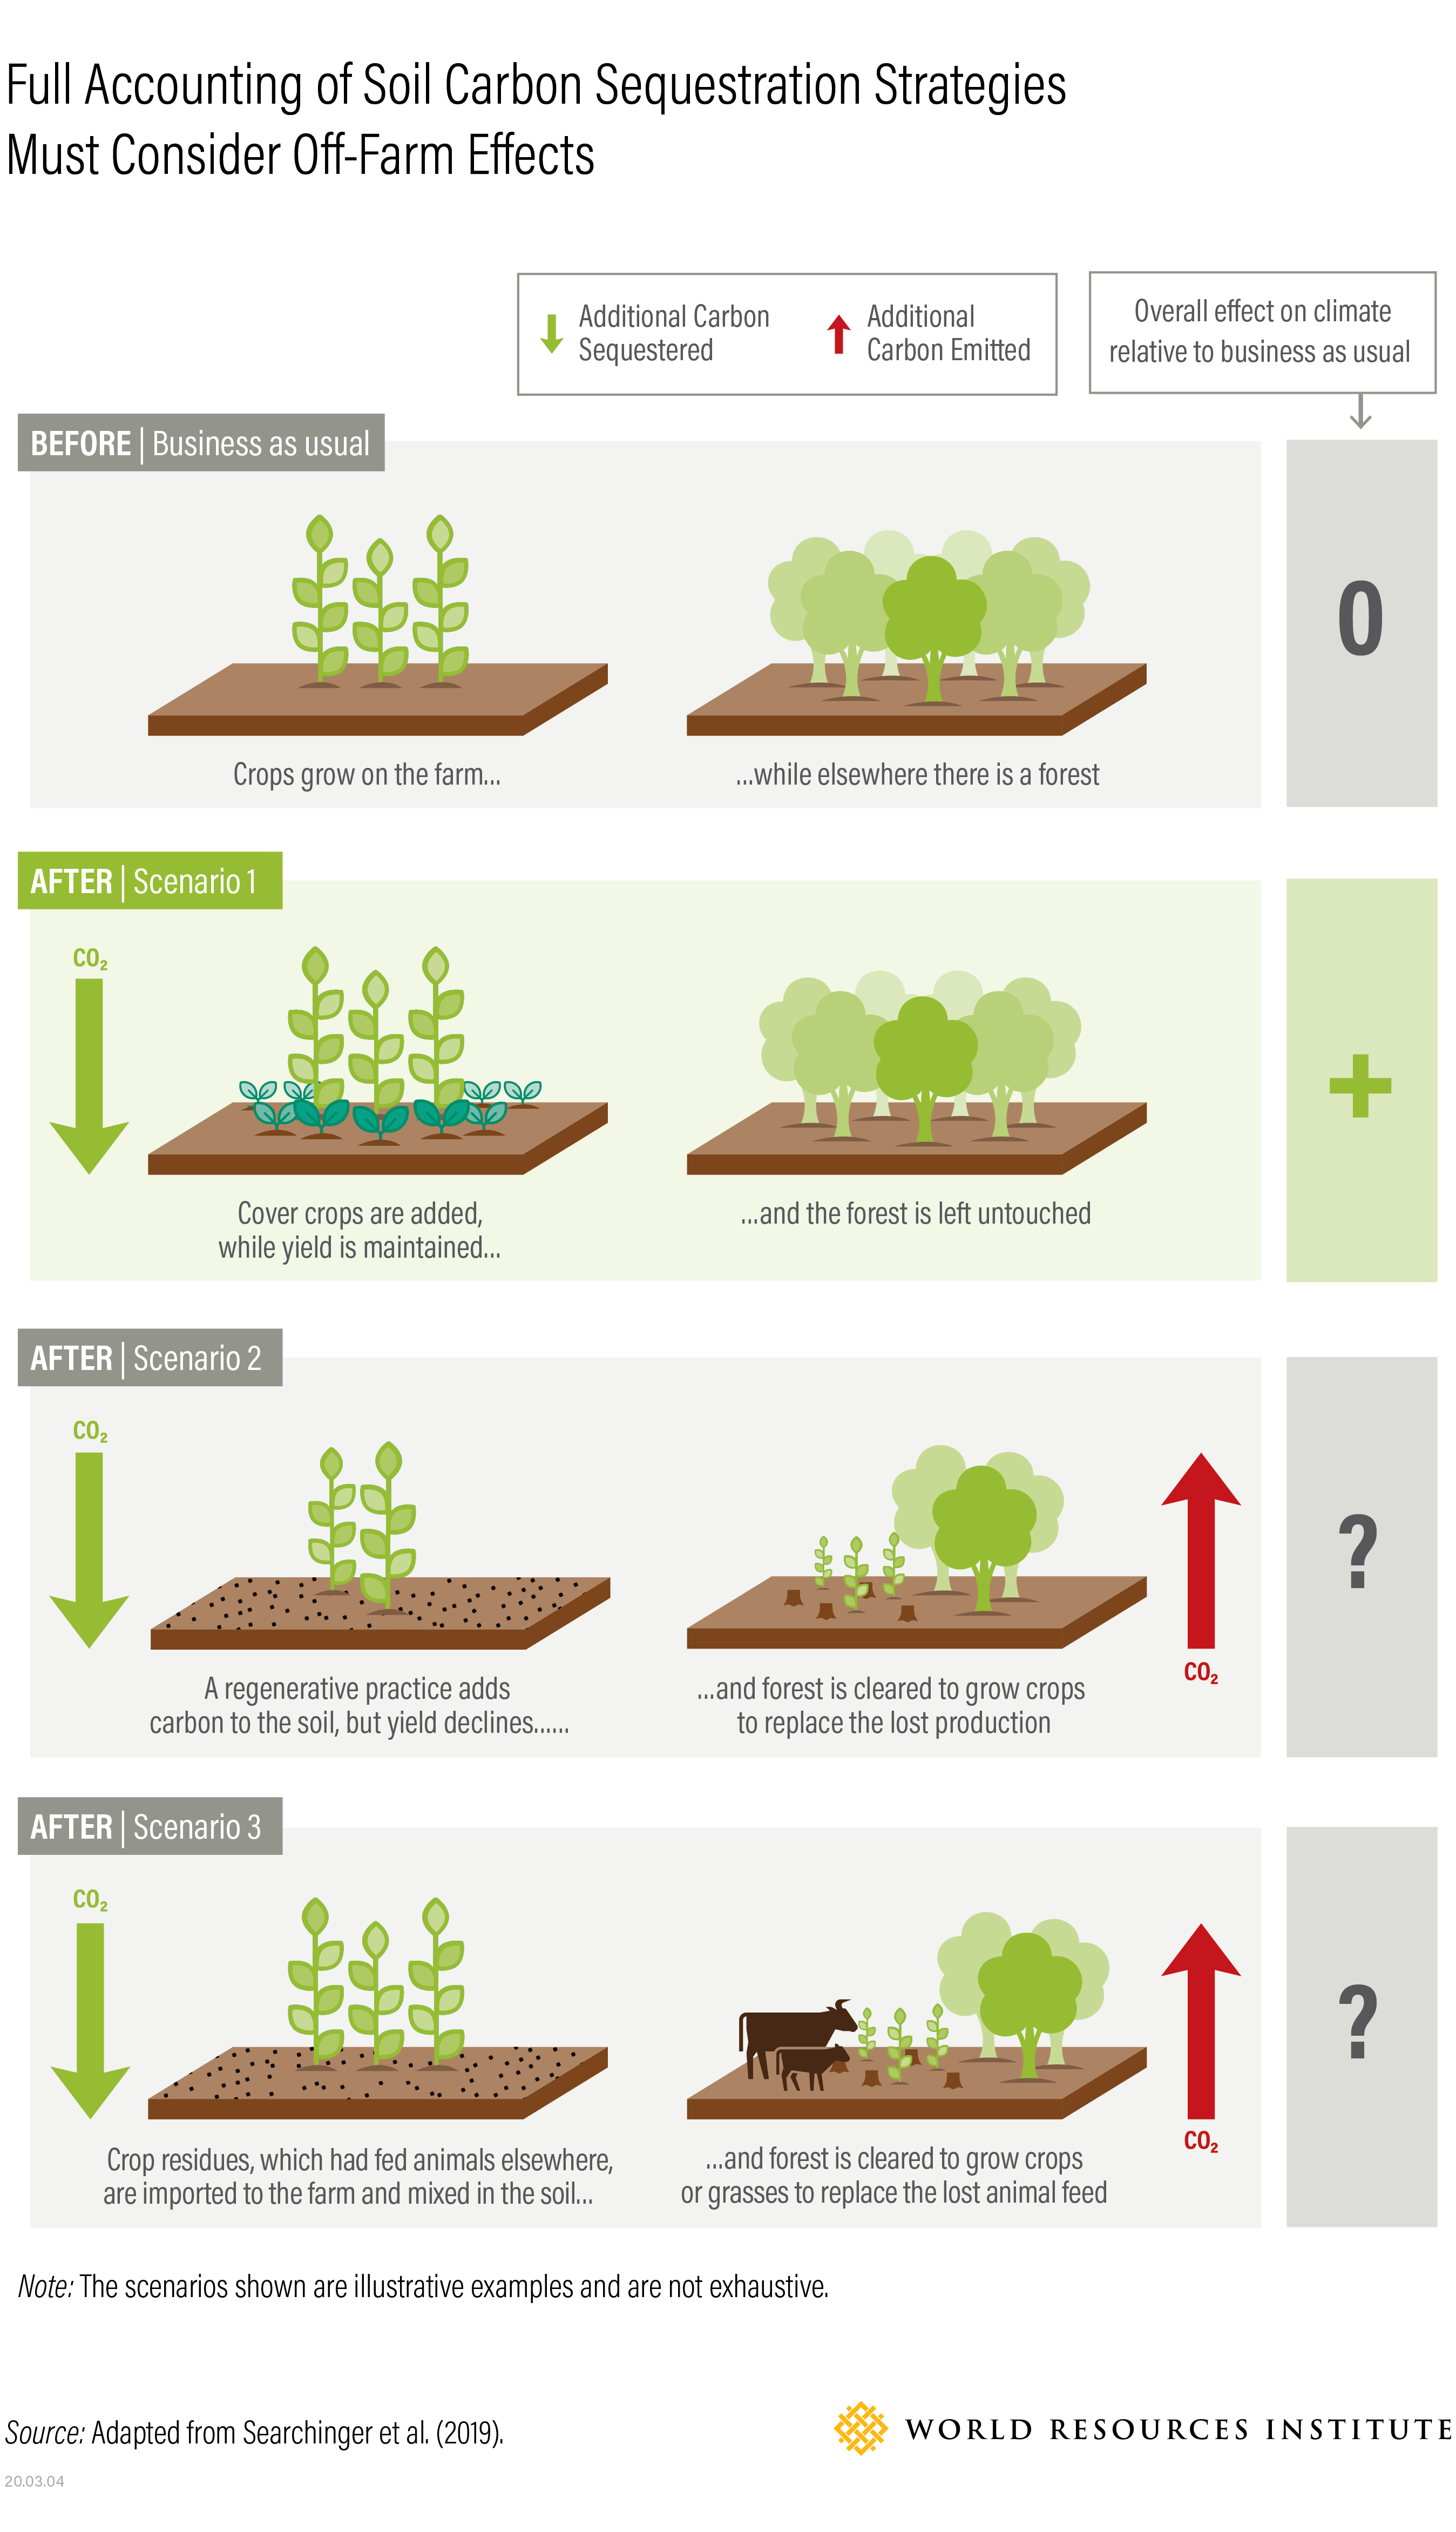 Illustration shows soil carbon sequestration strategies in three scenarios